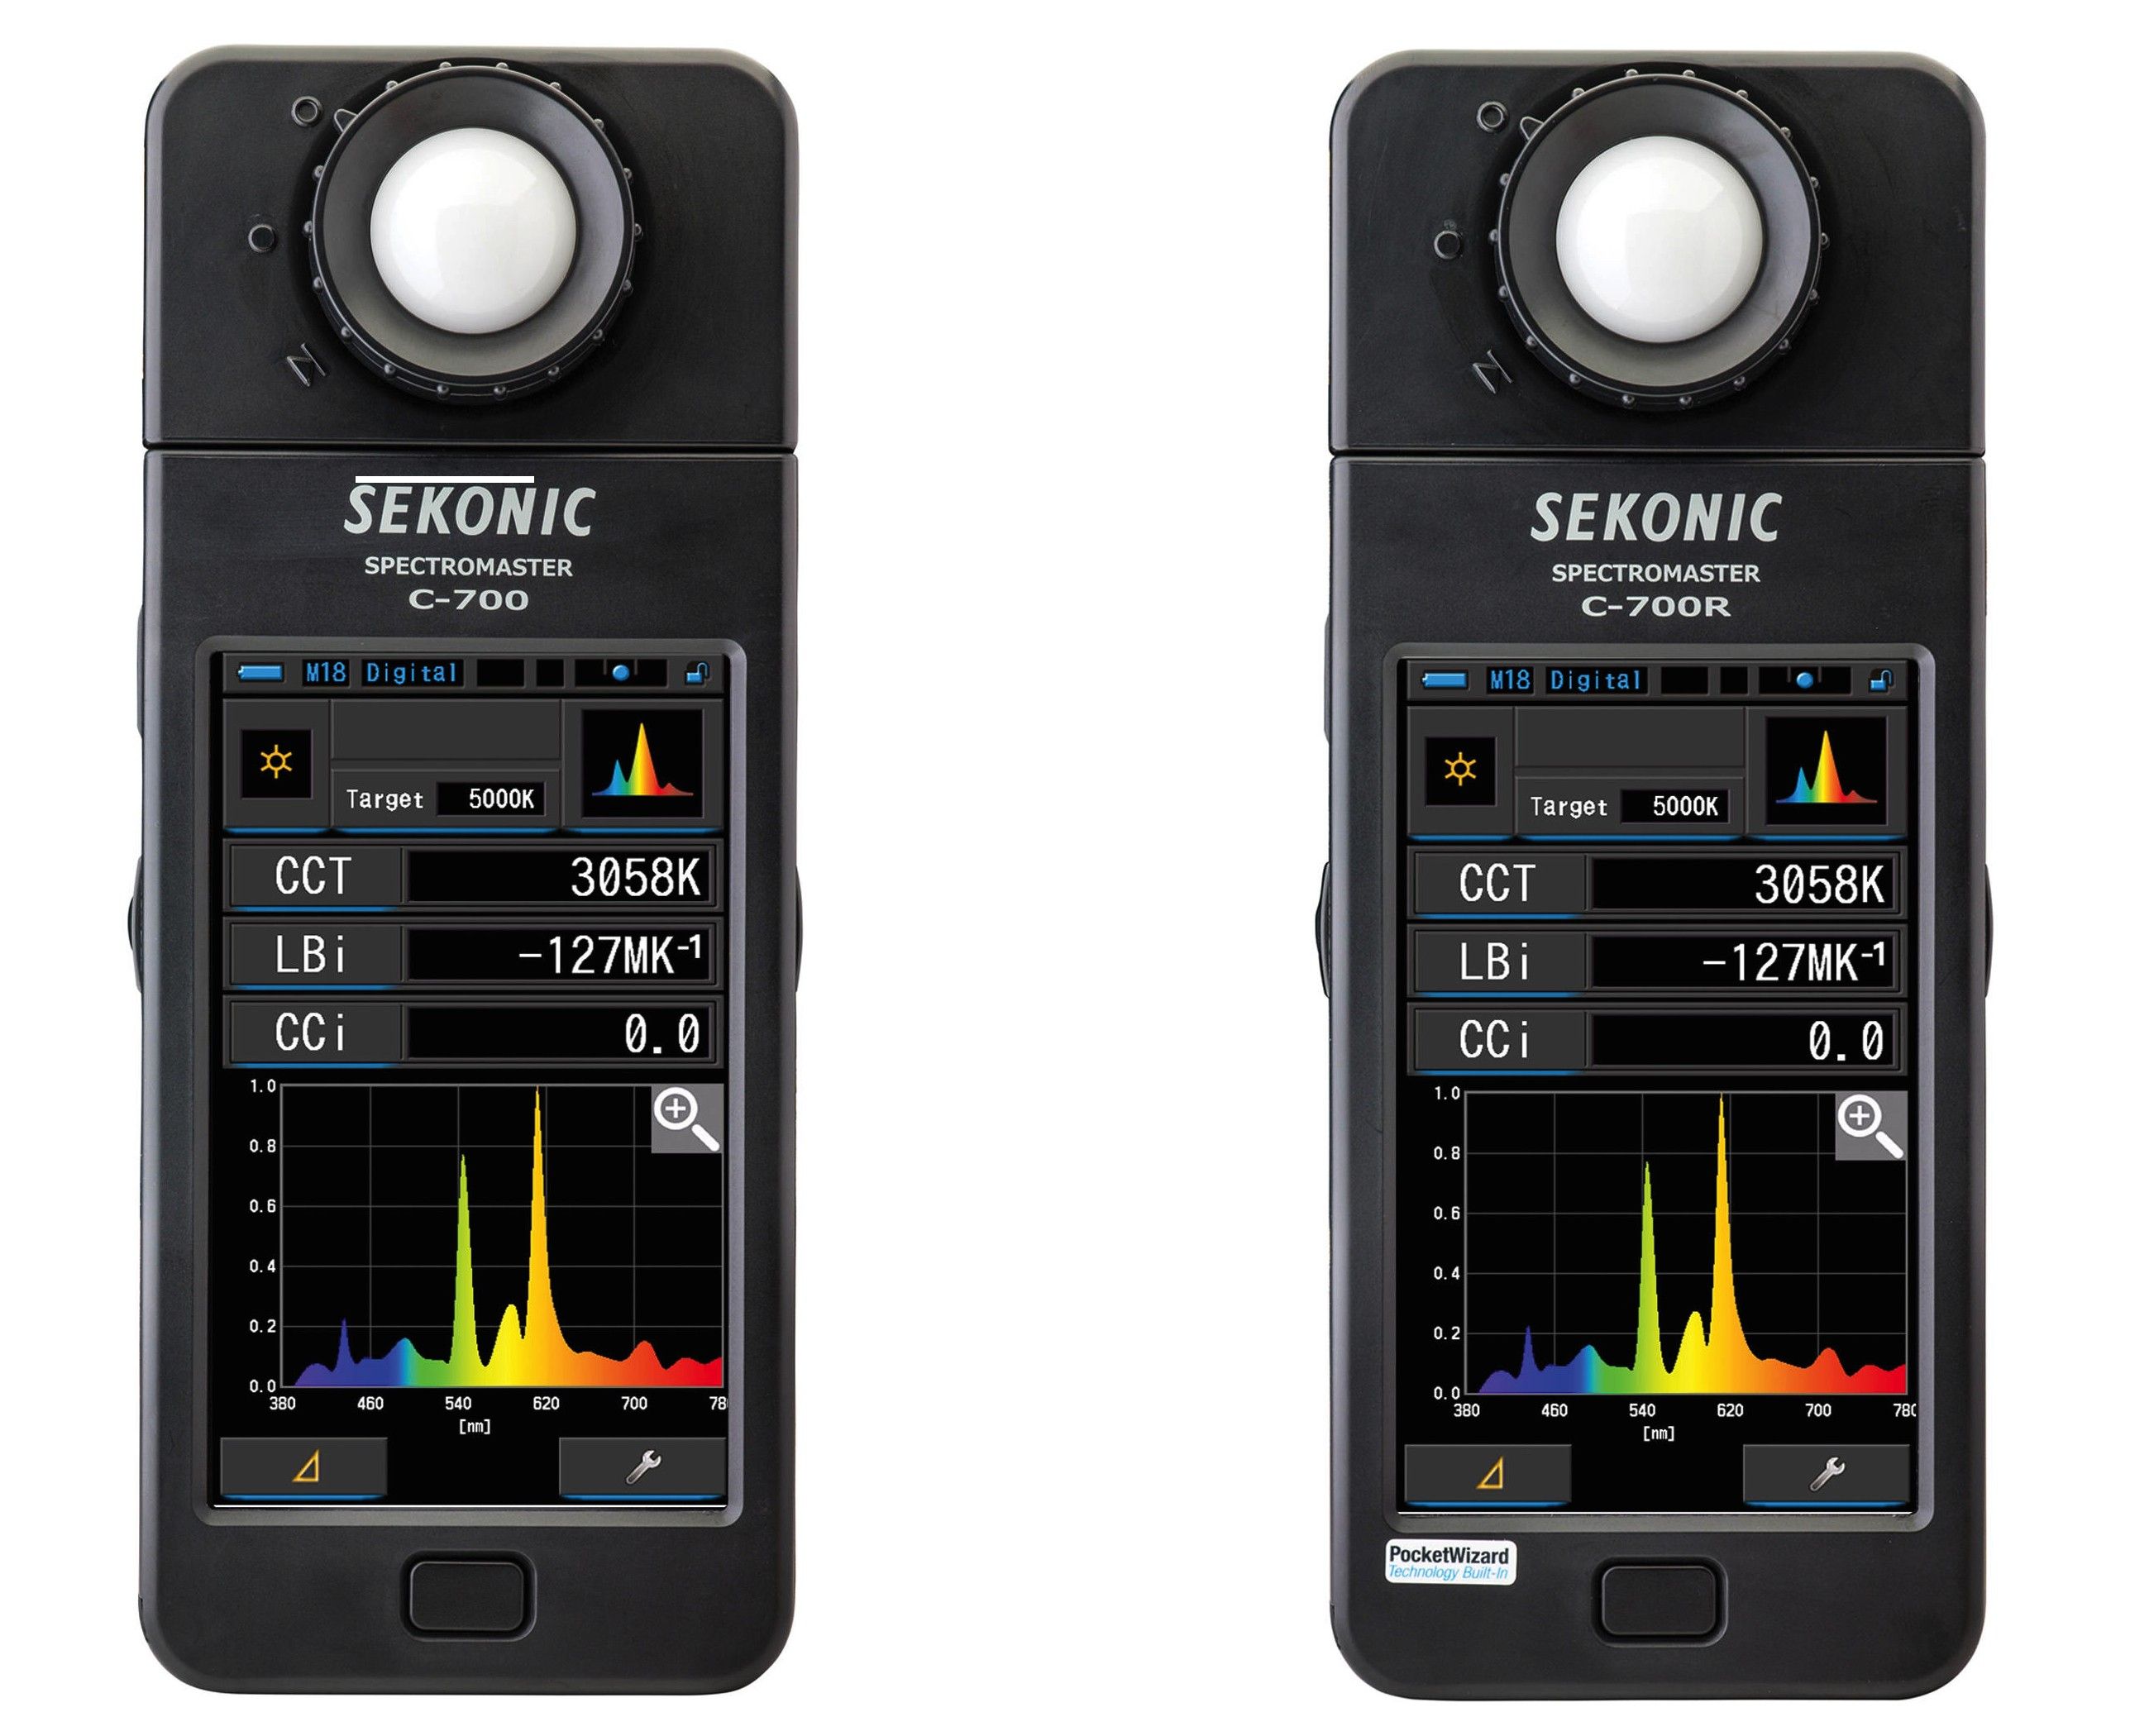 Sekonic C-700 & C-700R SpectroMaster Spectrometer Gives You Total 